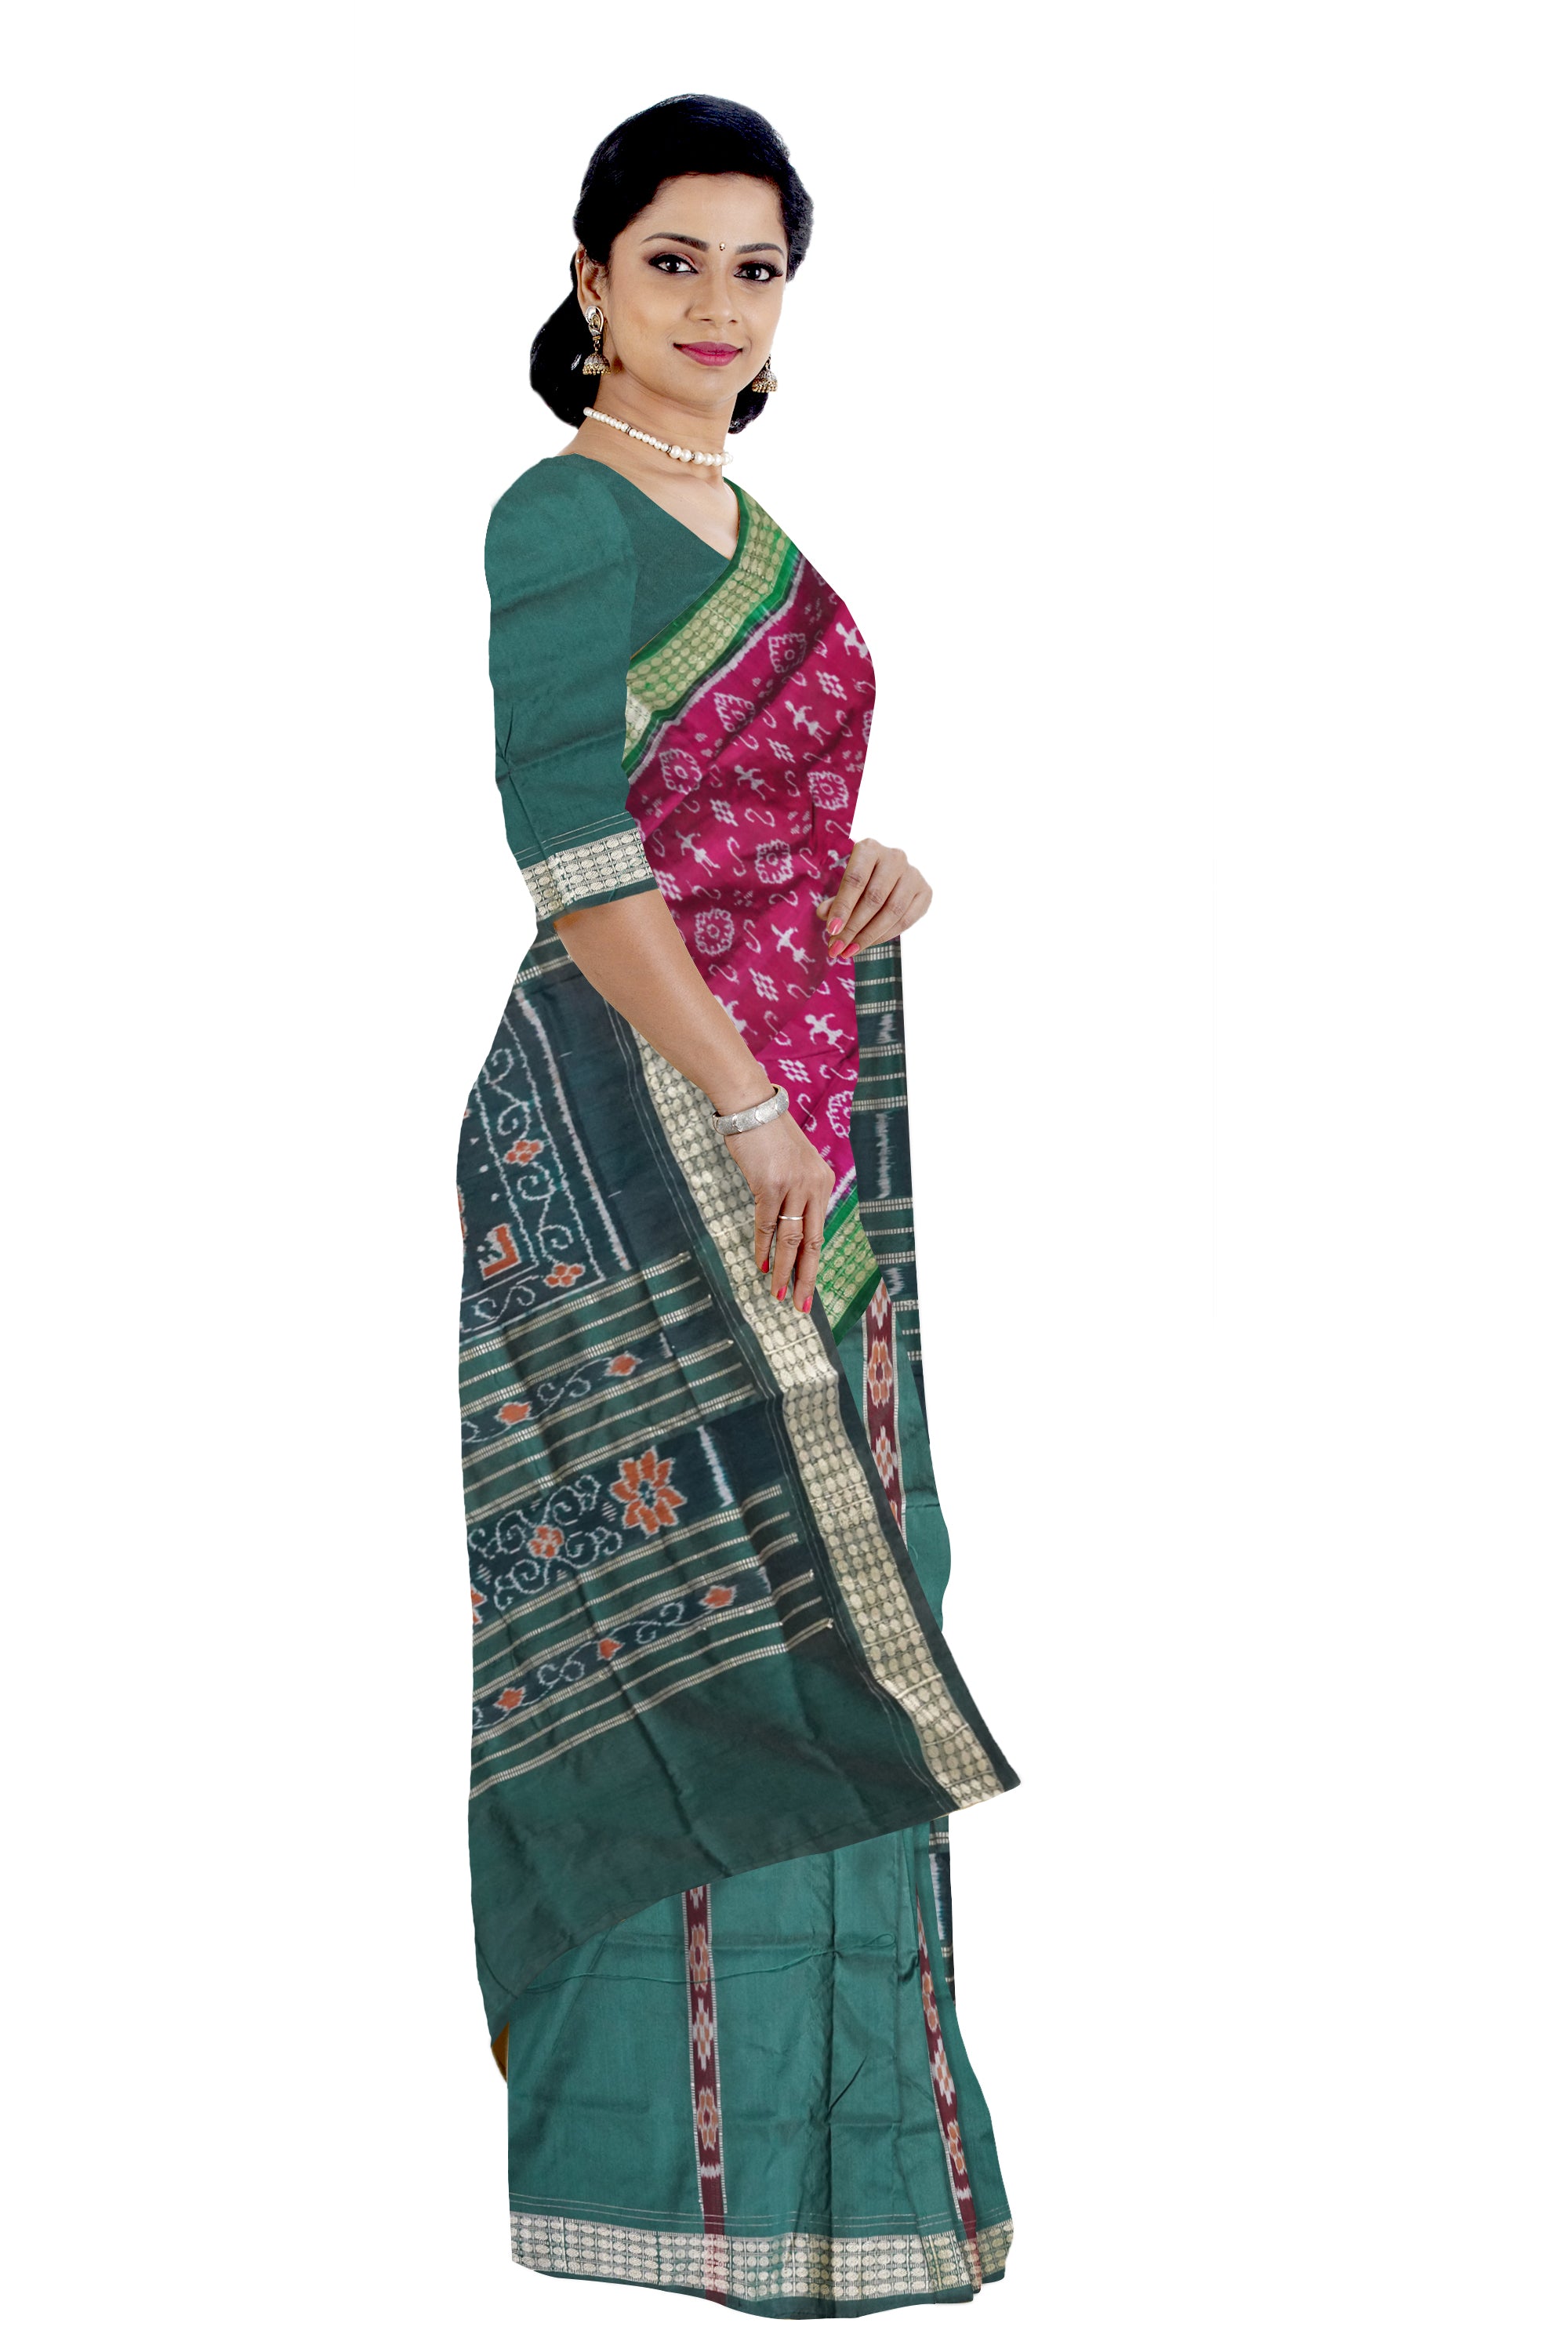 Pink and green terracotta patli Sambalpuri saree, versatile for all occasions. - Koshali Arts & Crafts Enterprise